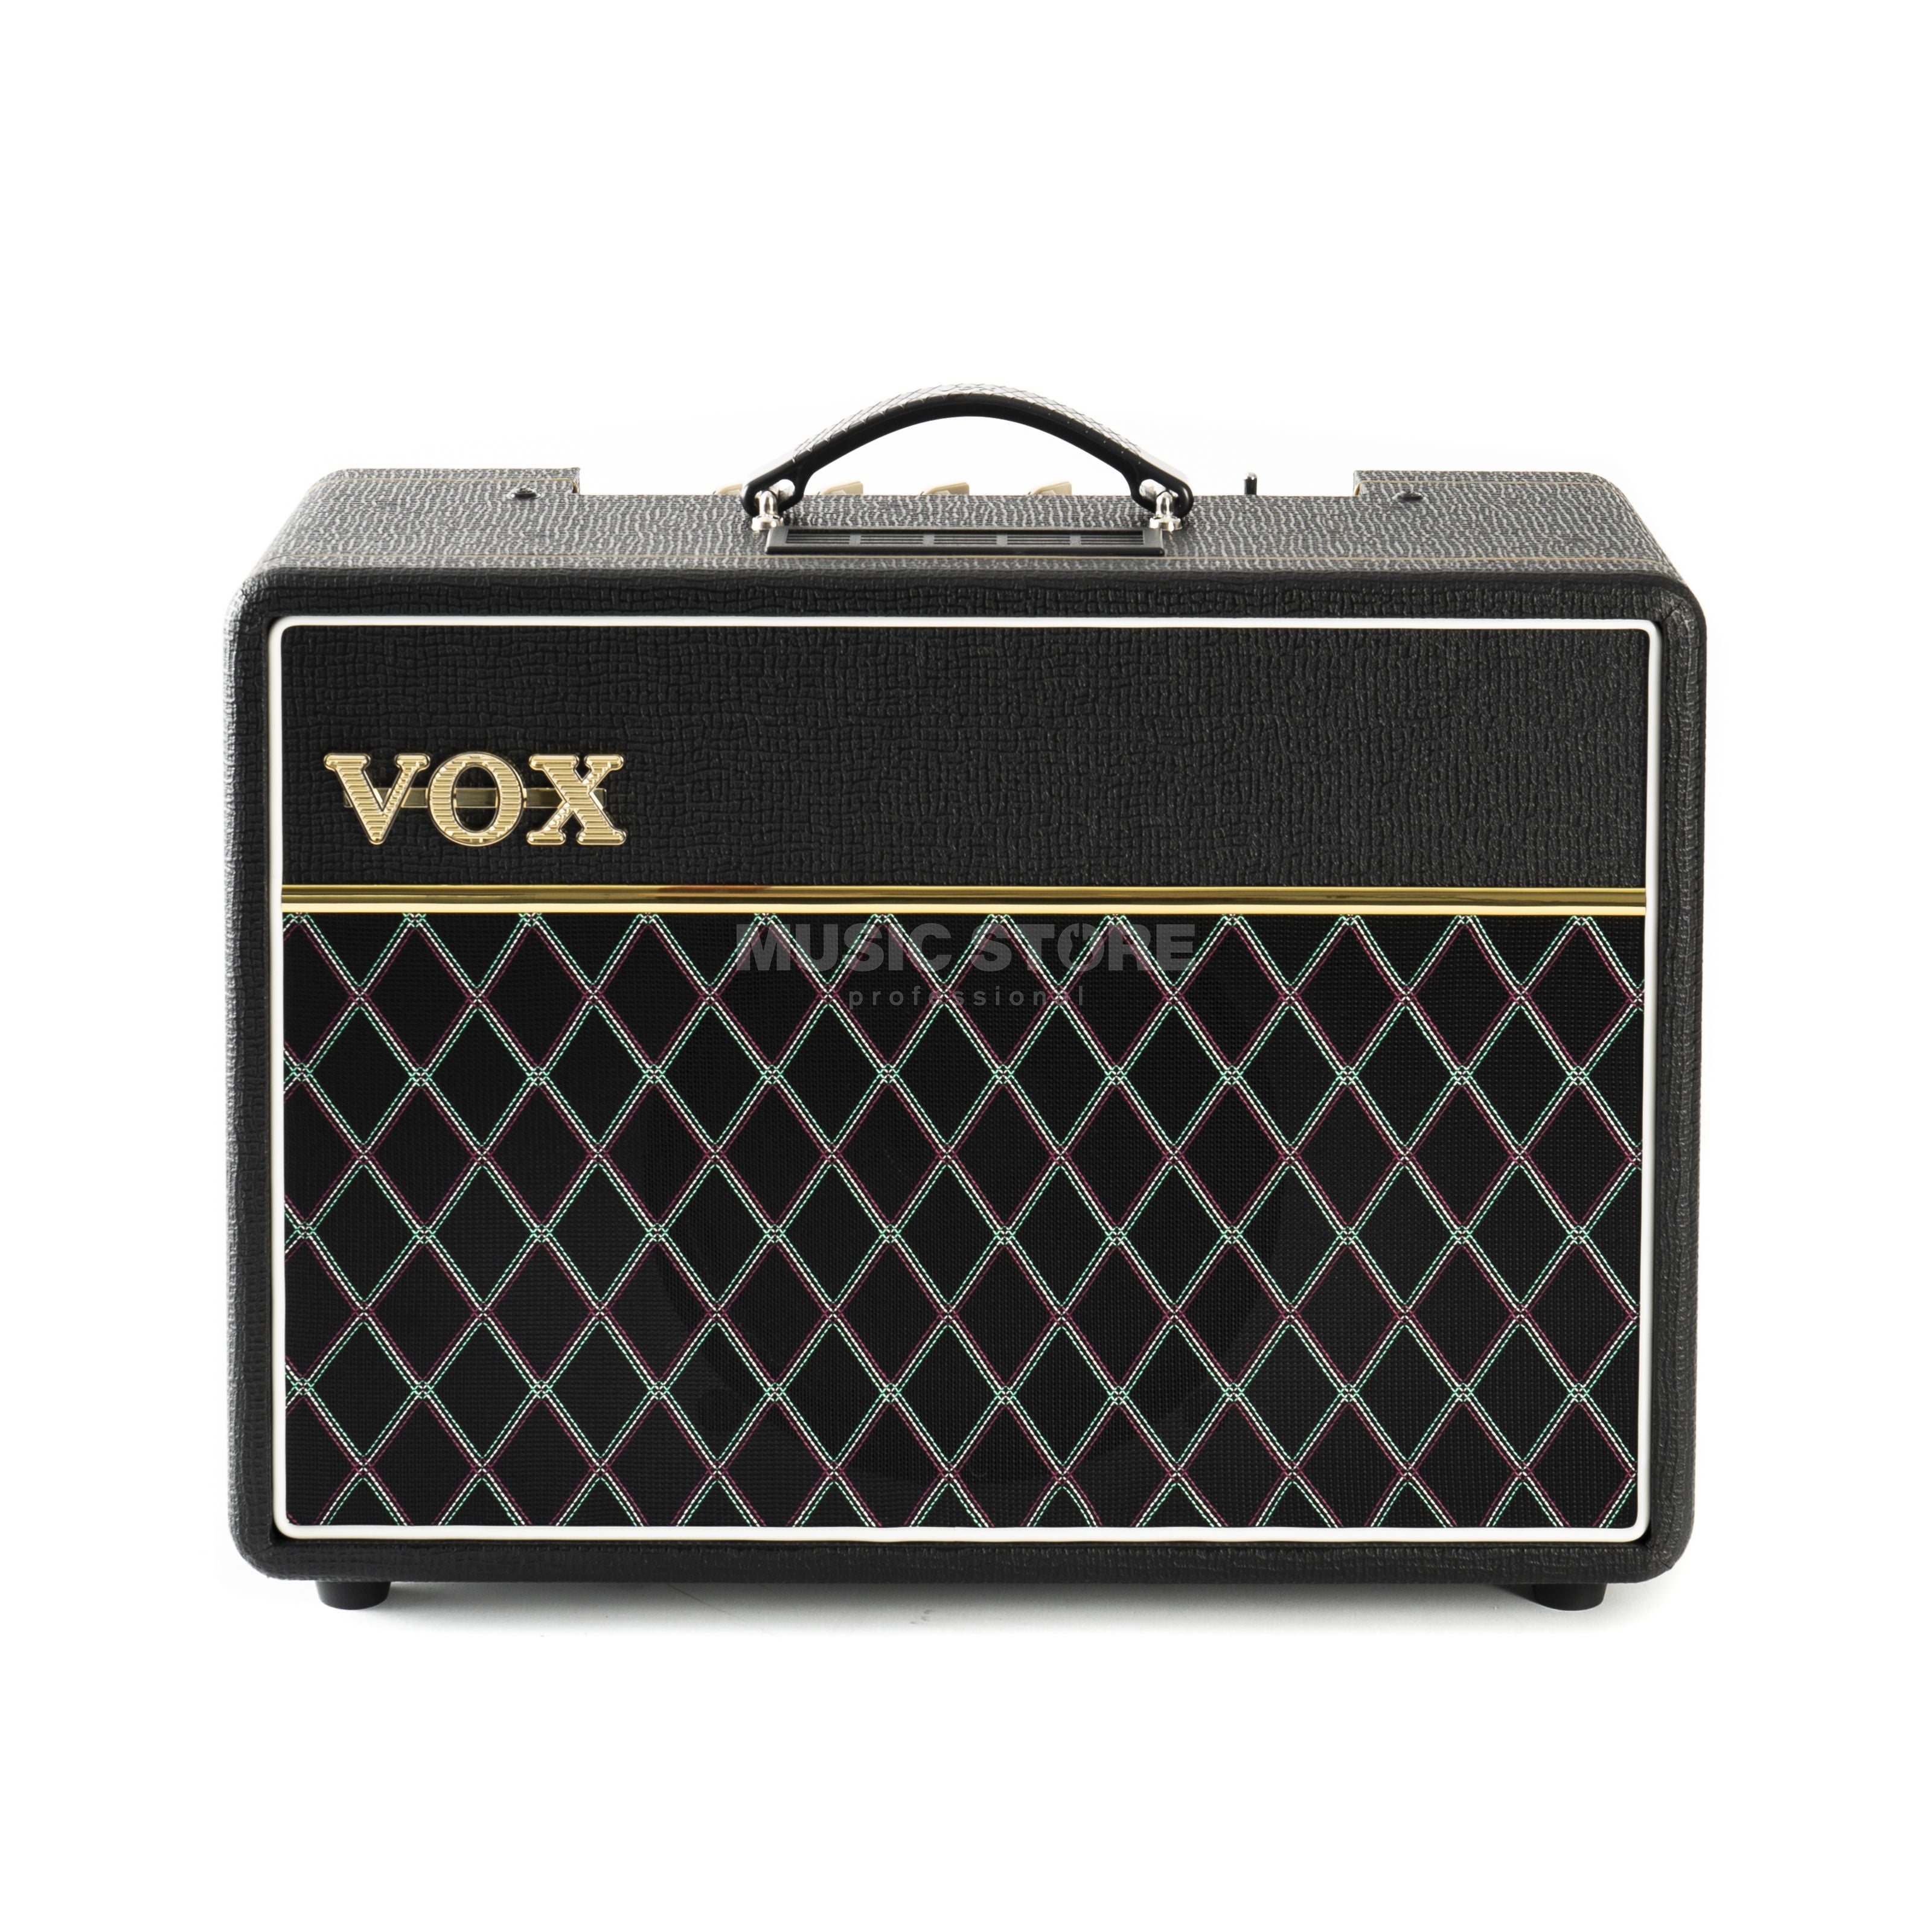 Vox AC10C1-VS 10 Watt 1x10 Limited Edition Tube Combo Guitar Amp Amplifier